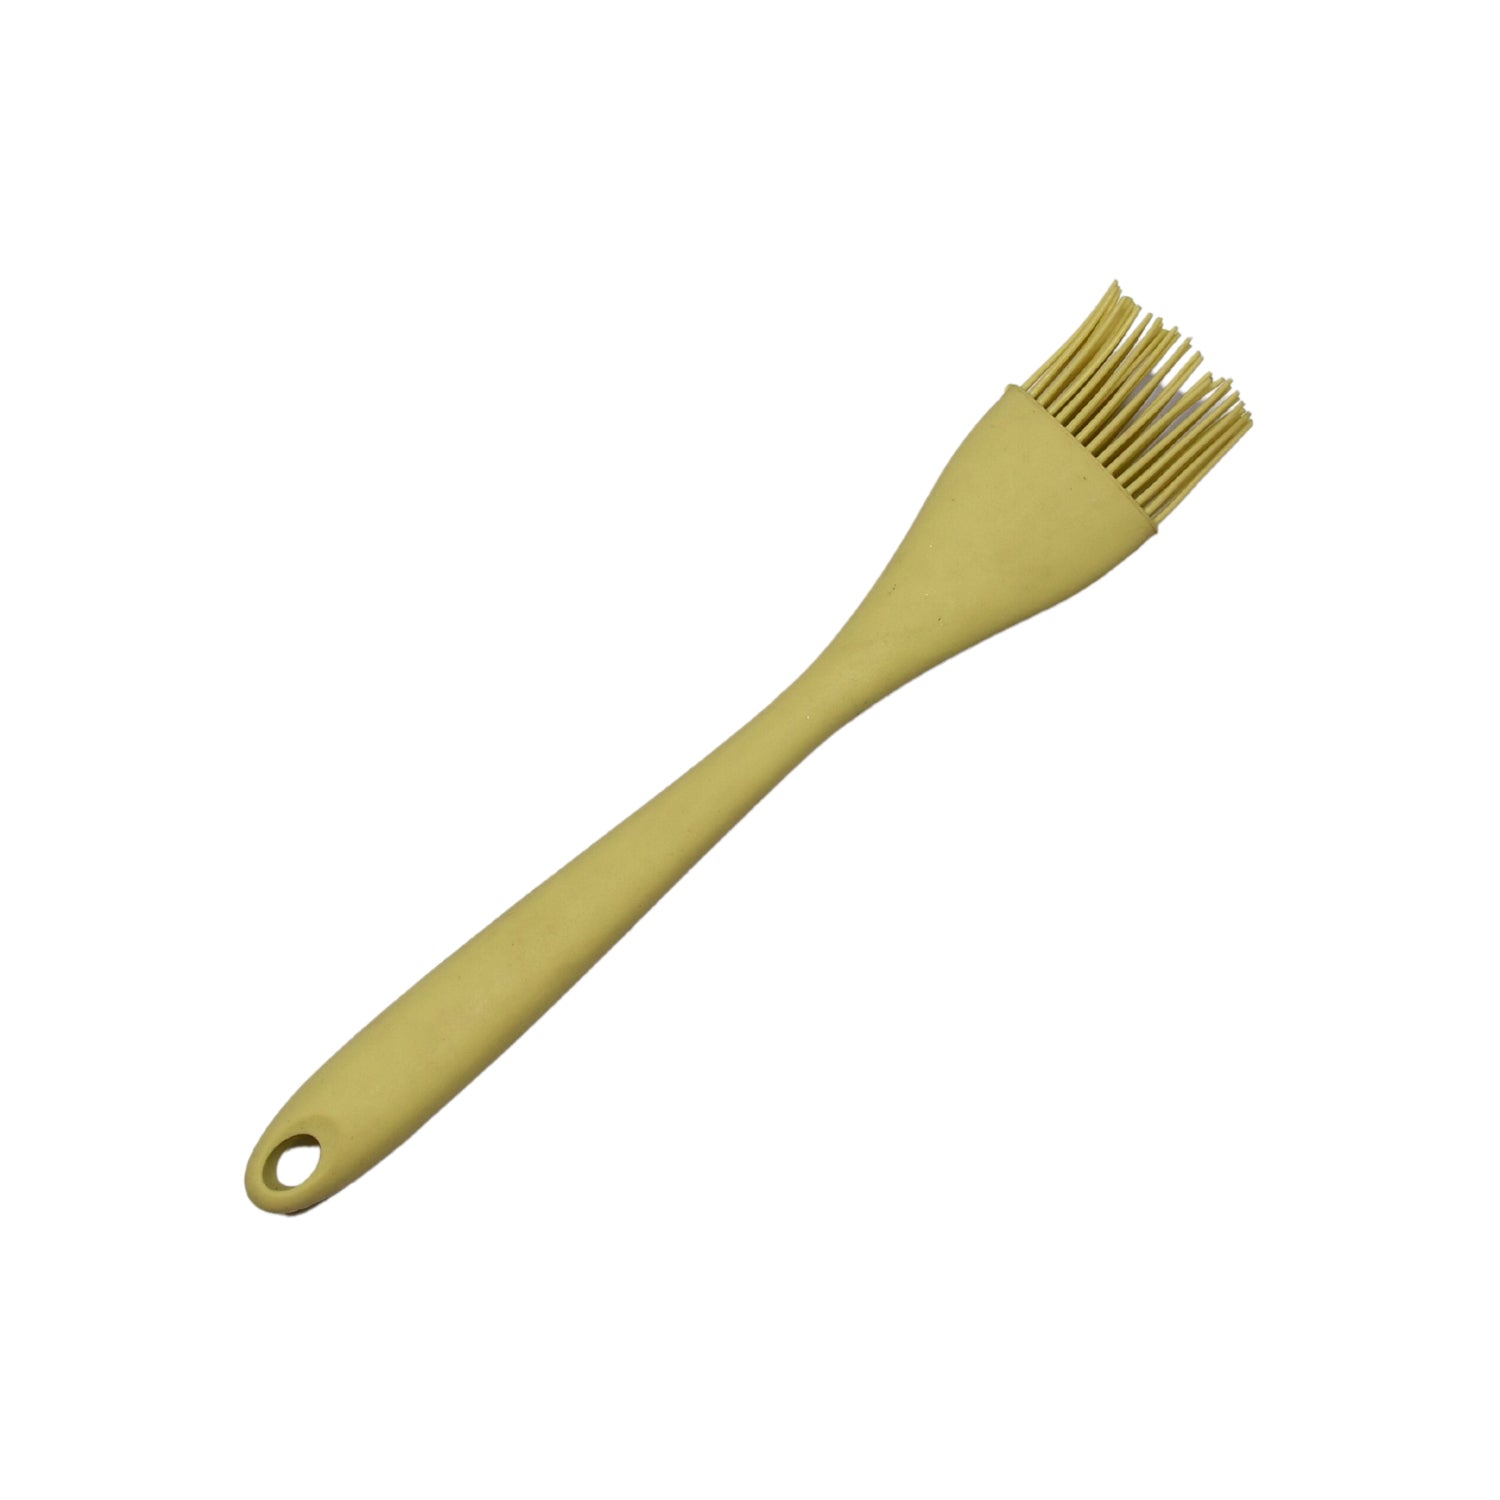 5412 Silicone Non-Stick Pastry/Basting Brush. DeoDap